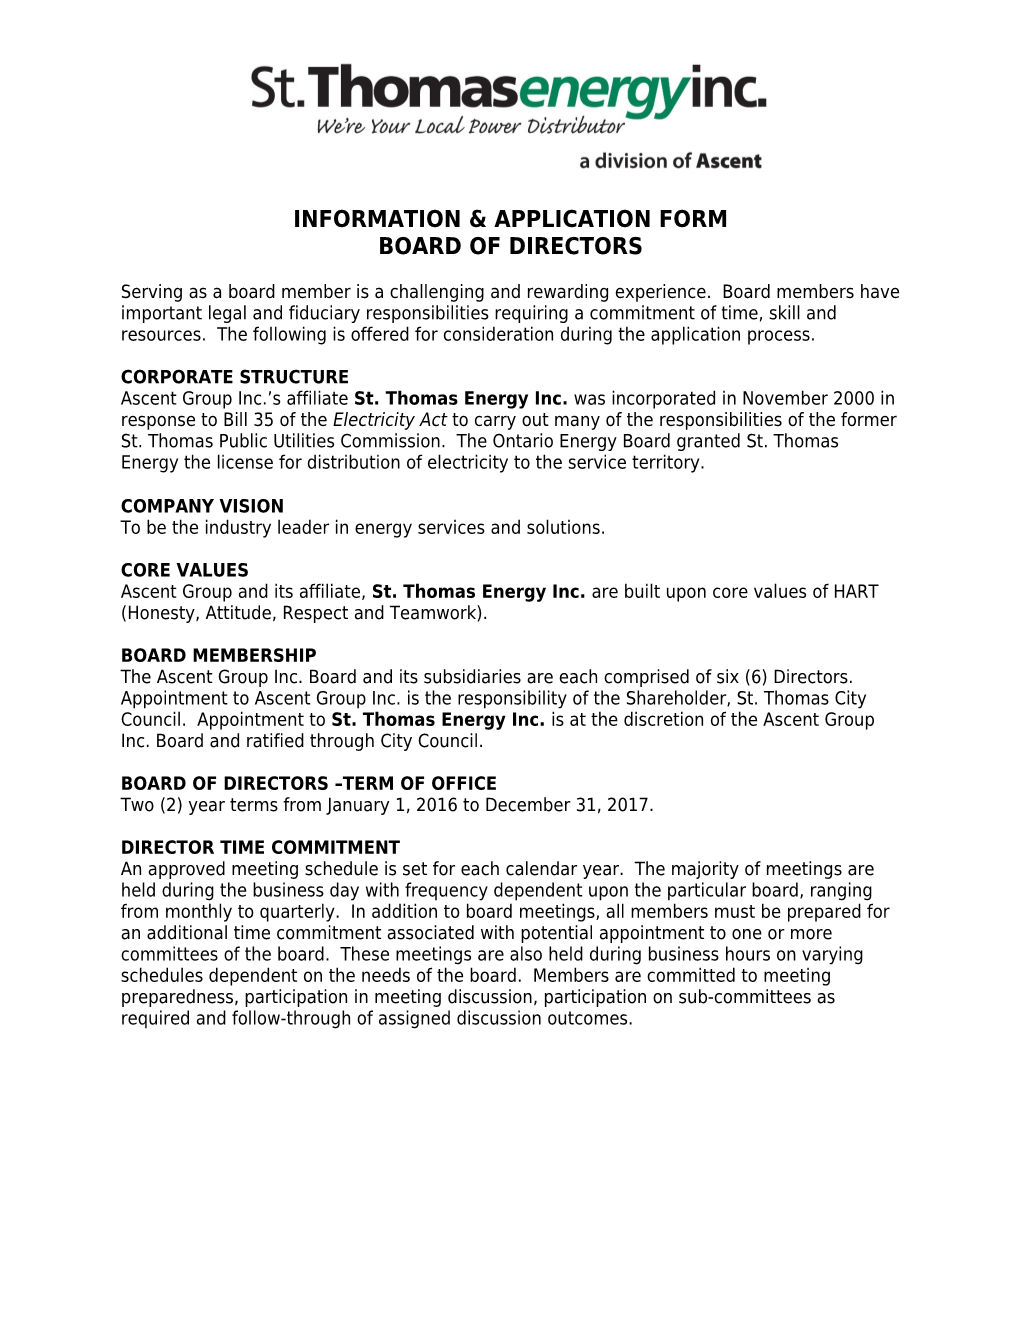 Board of Directors Application Form